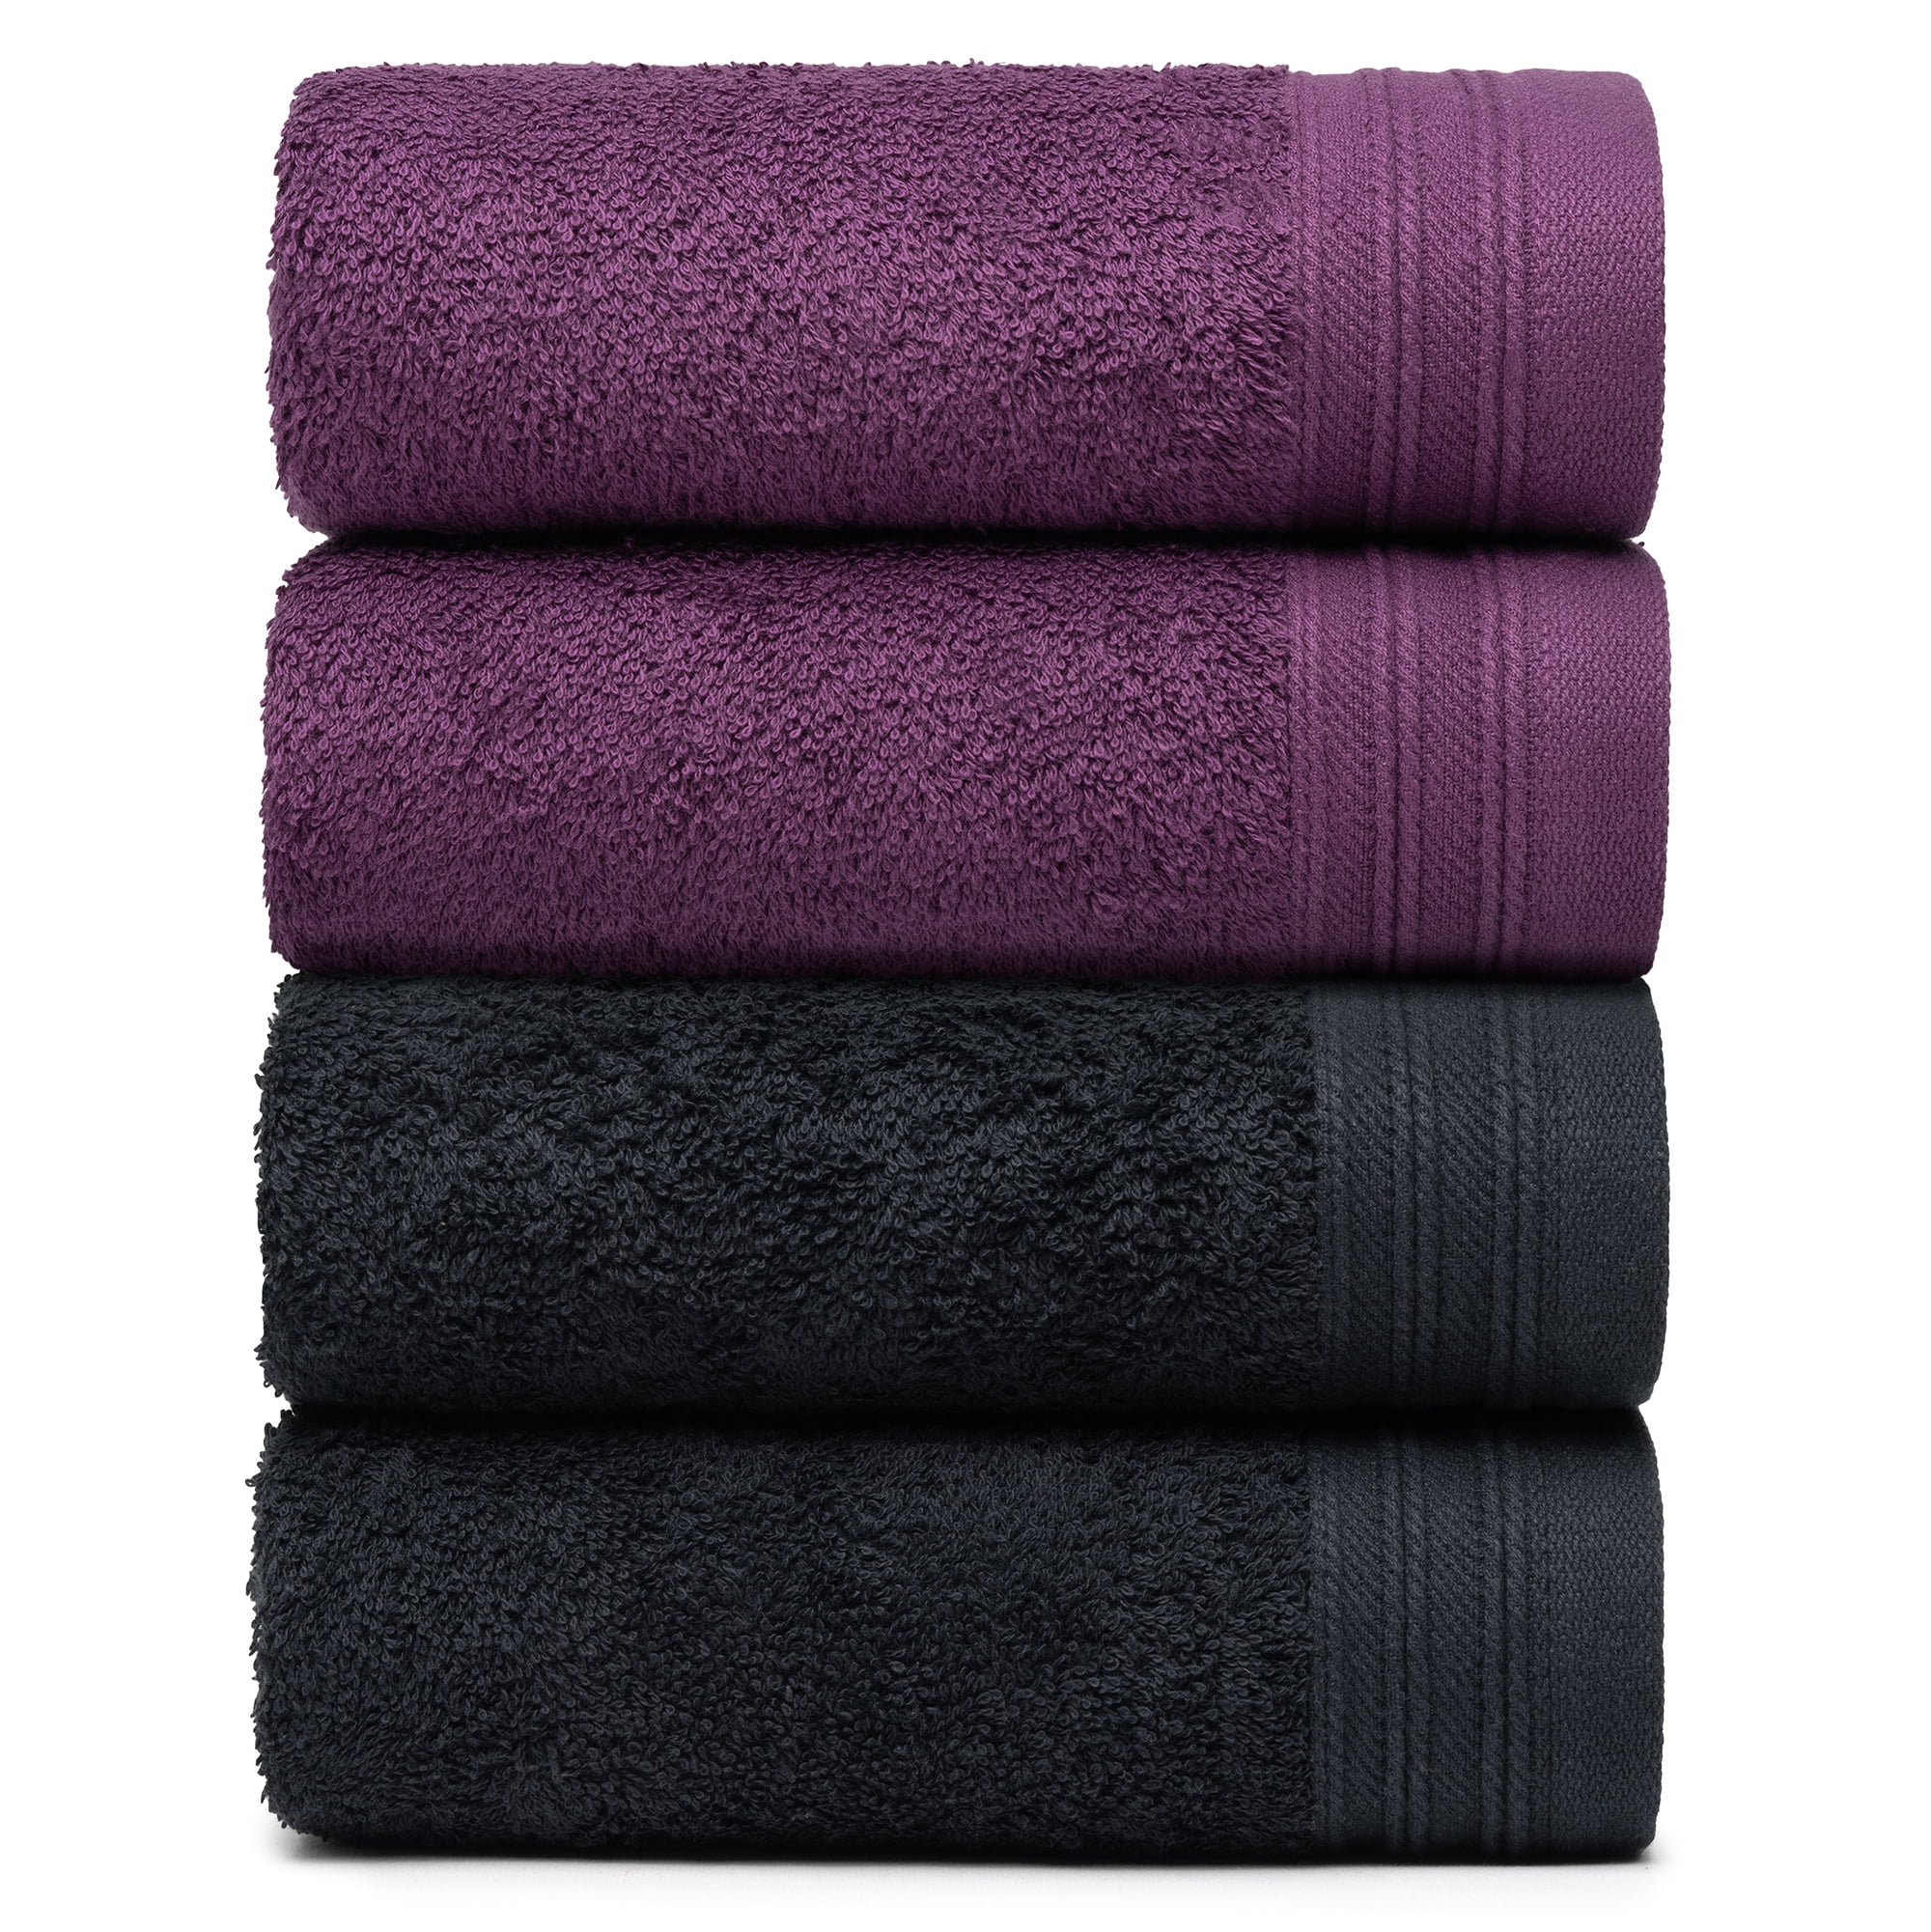 Turkey Hand Towel, Purple Hand Towel,20x40, Dish Towel, Small Hand